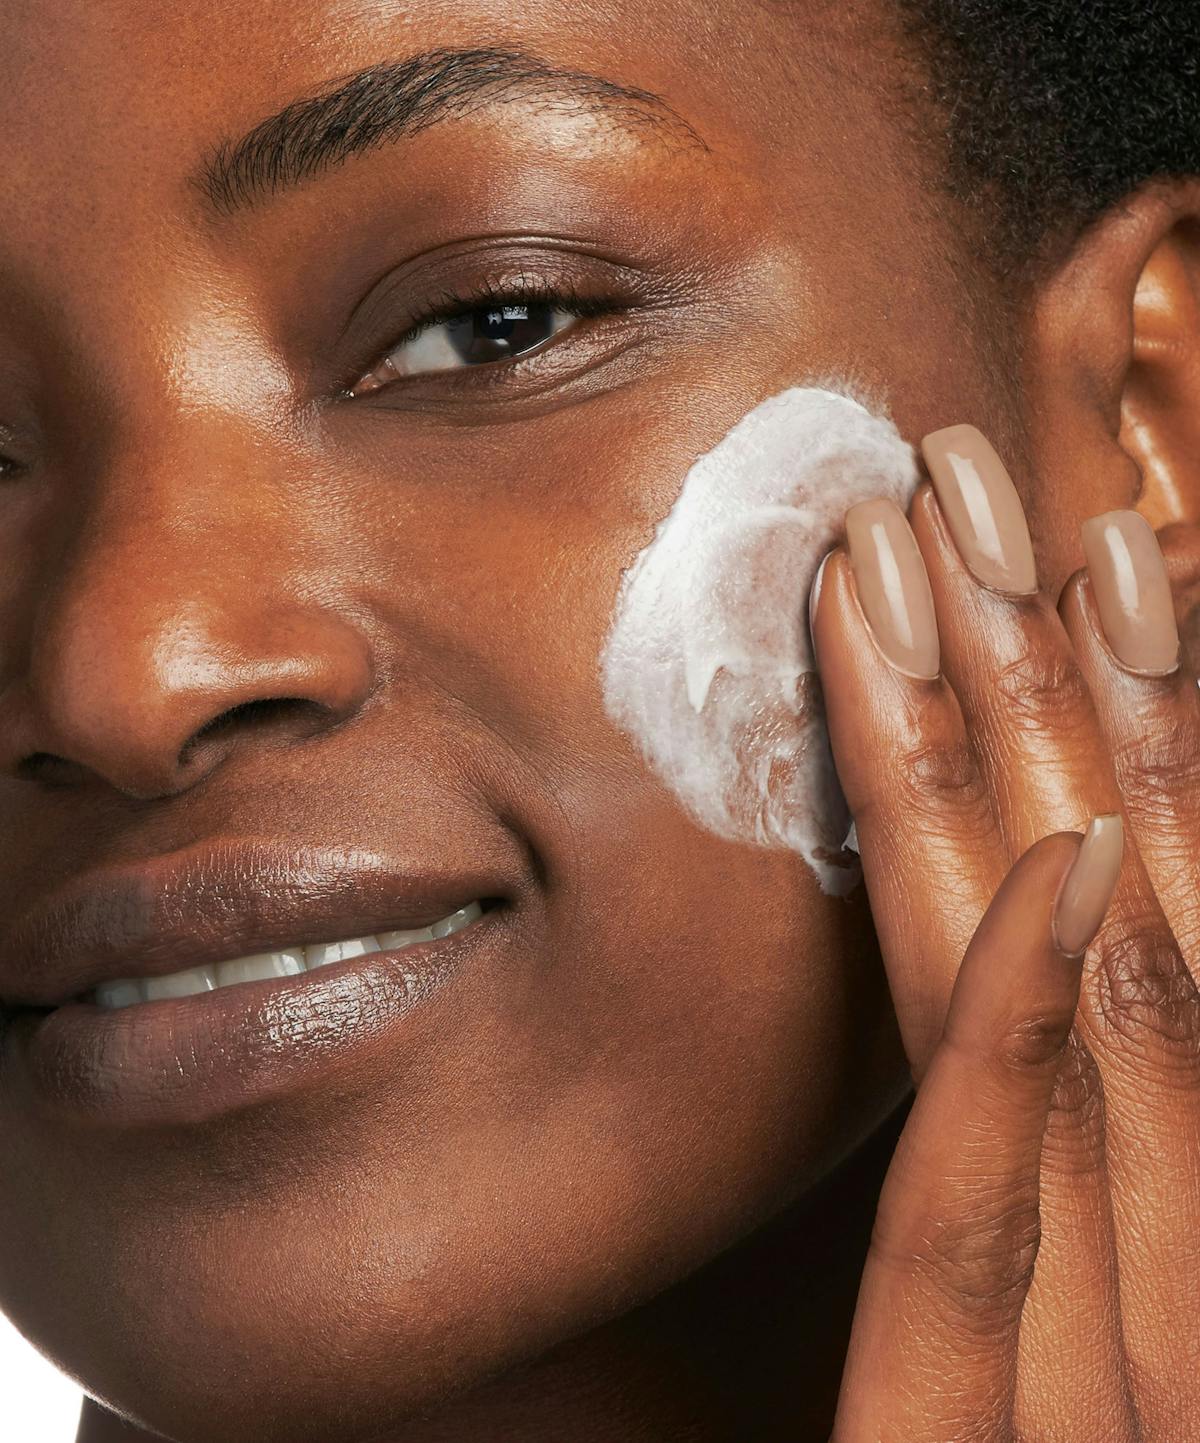 Buy Resurface: Ultra Smoothing Cream (40g)